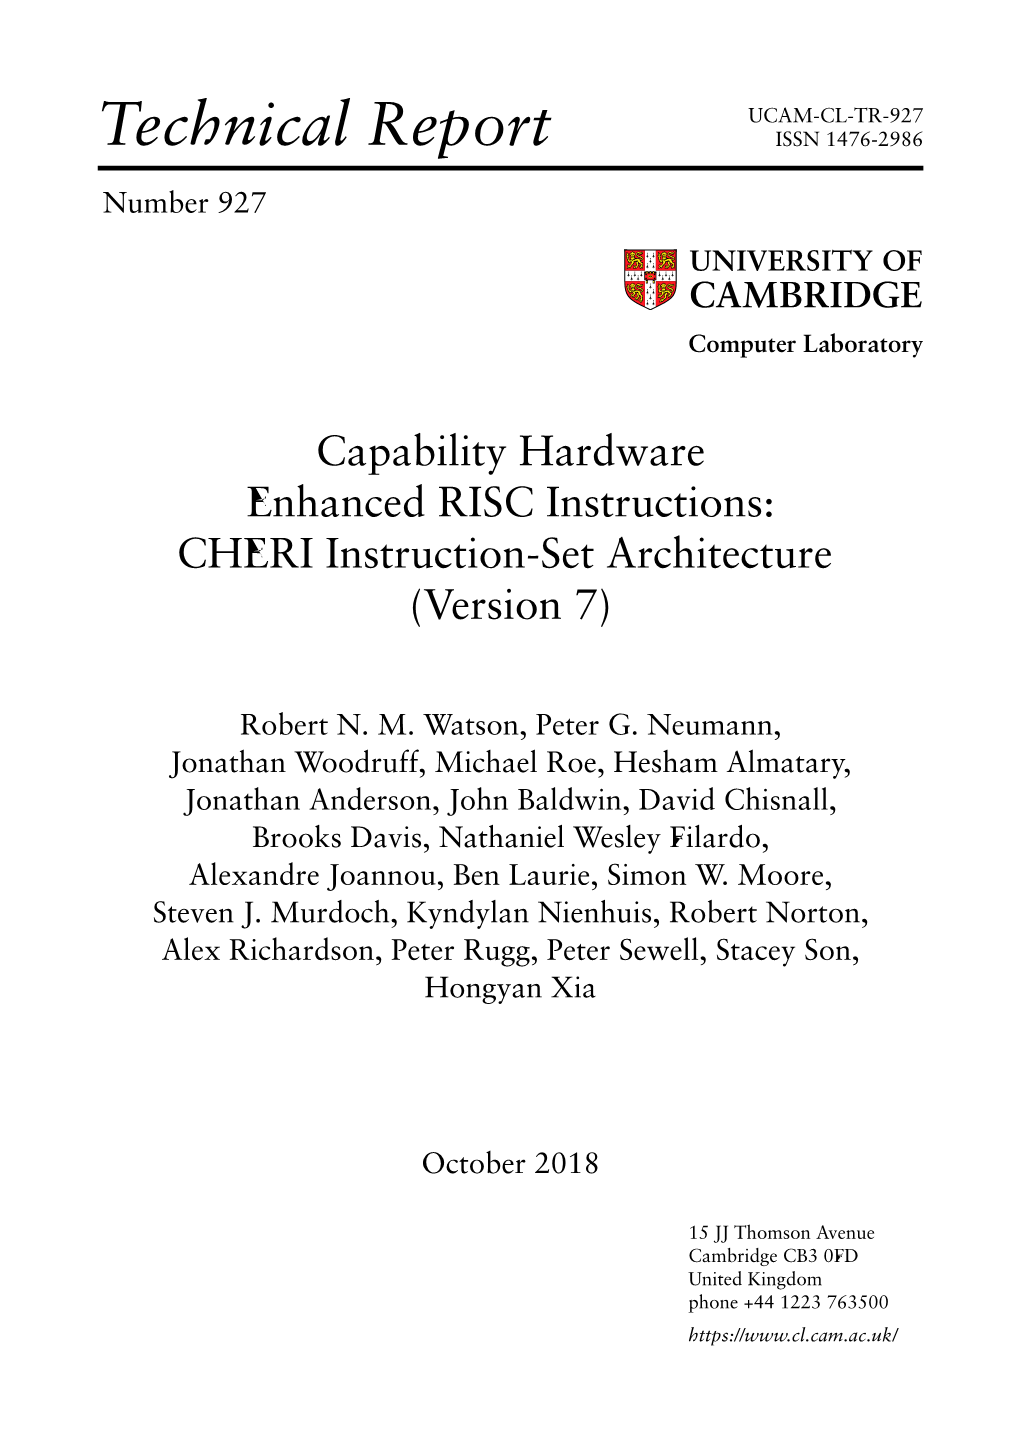 Capability Hardware Enhanced RISC Instructions: CHERI Instruction-Set Architecture (Version 7)